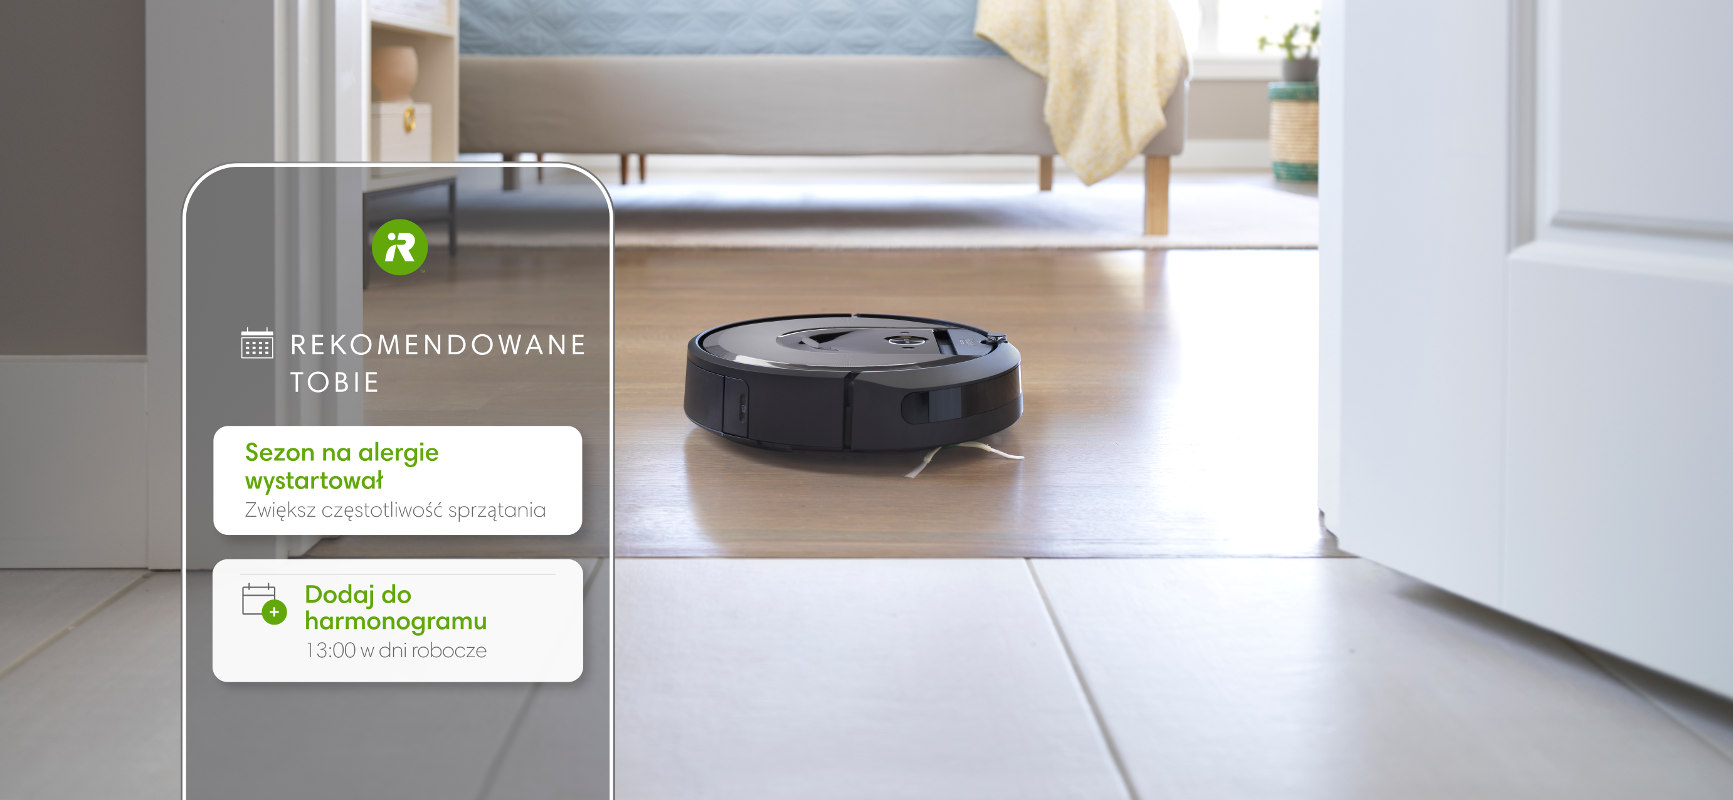 iRobot Roomba i7 personalizowane sugestie sprzątania